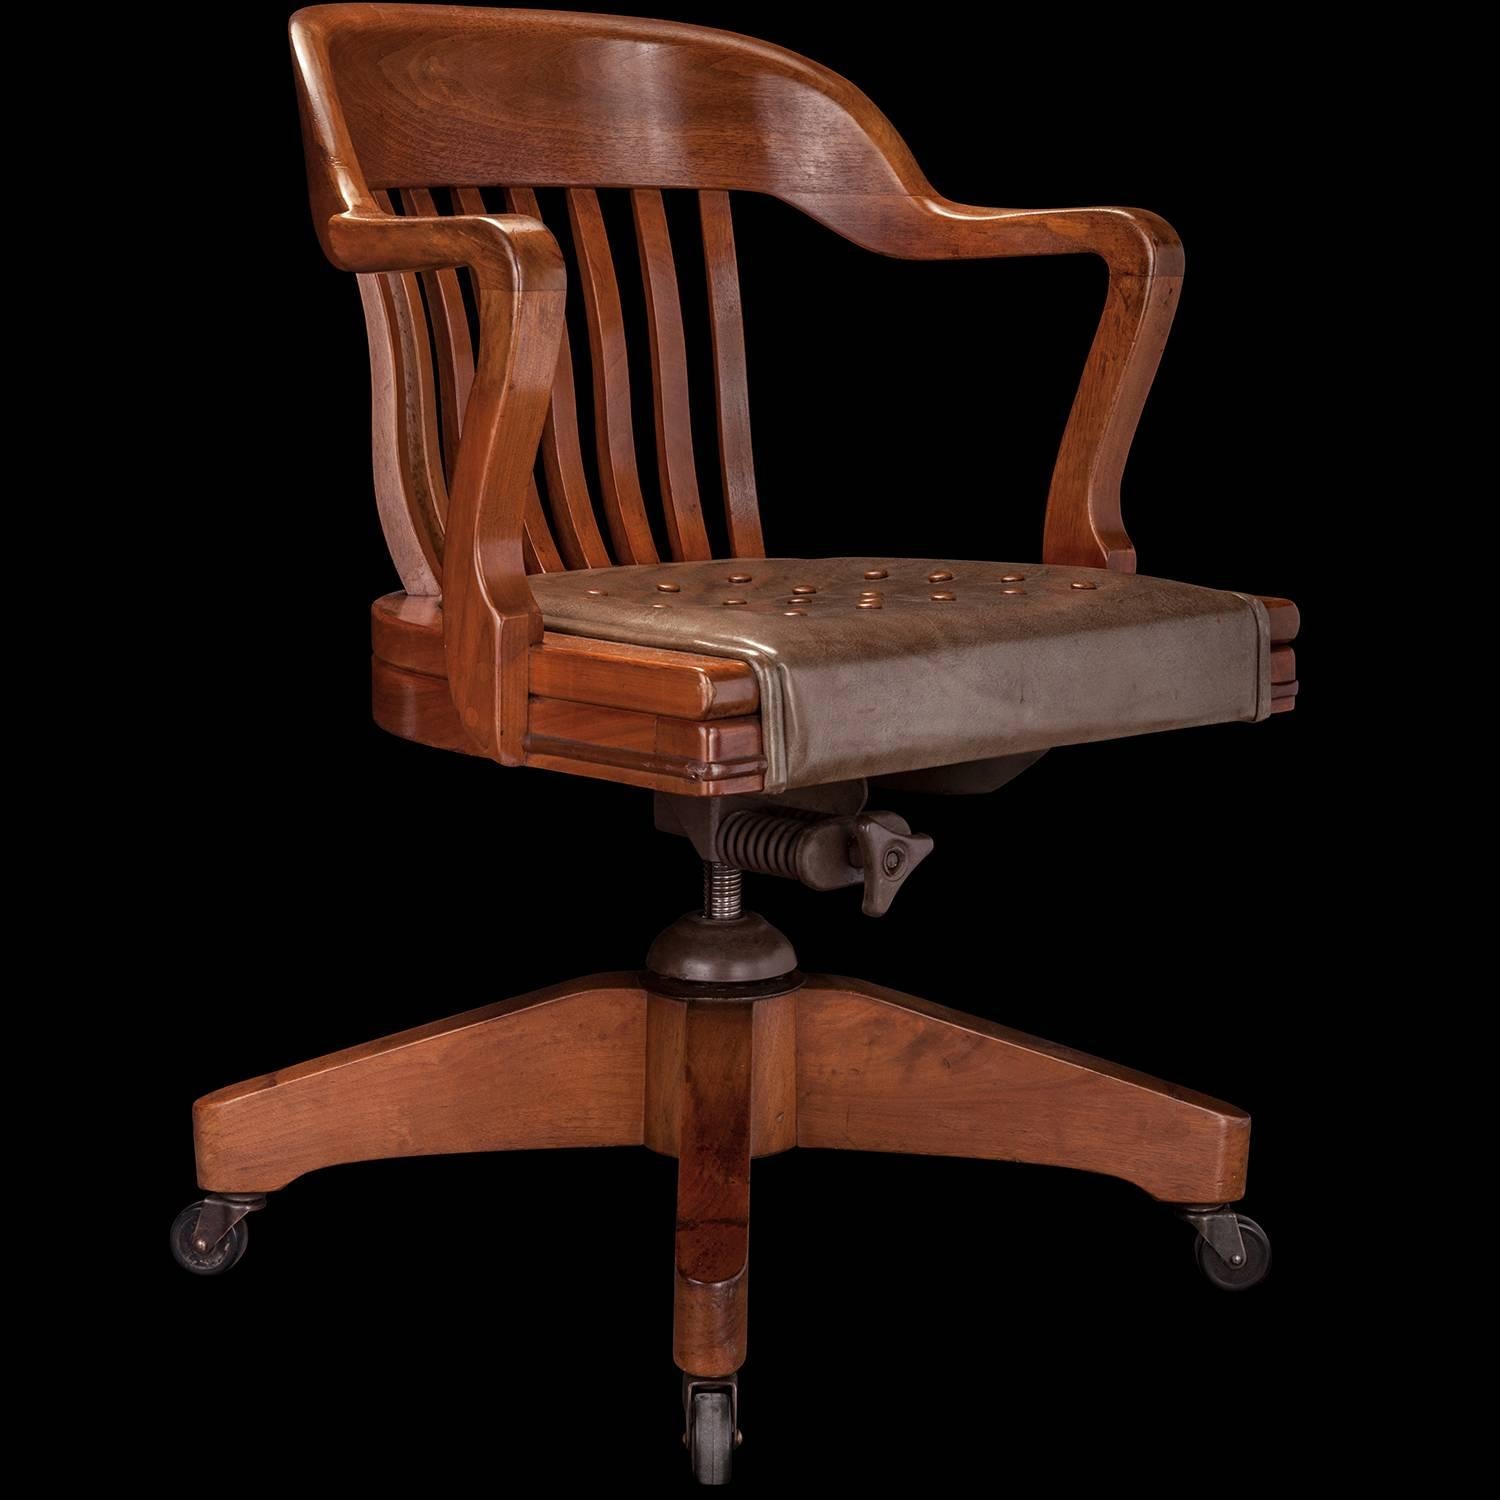 Walnut desk chair manufactured by W.H. Gunlocke Chair Co.